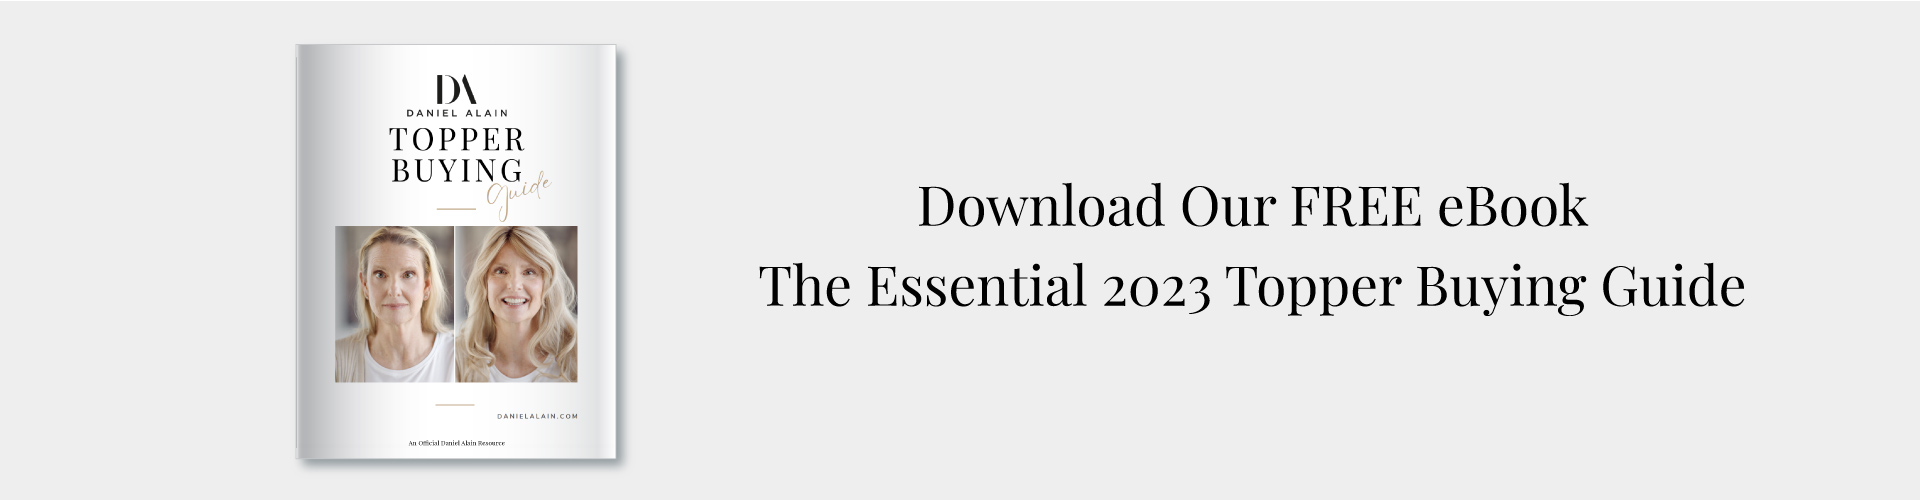 ebook-2023-topper-buying-guide-desktop-banner-1920px